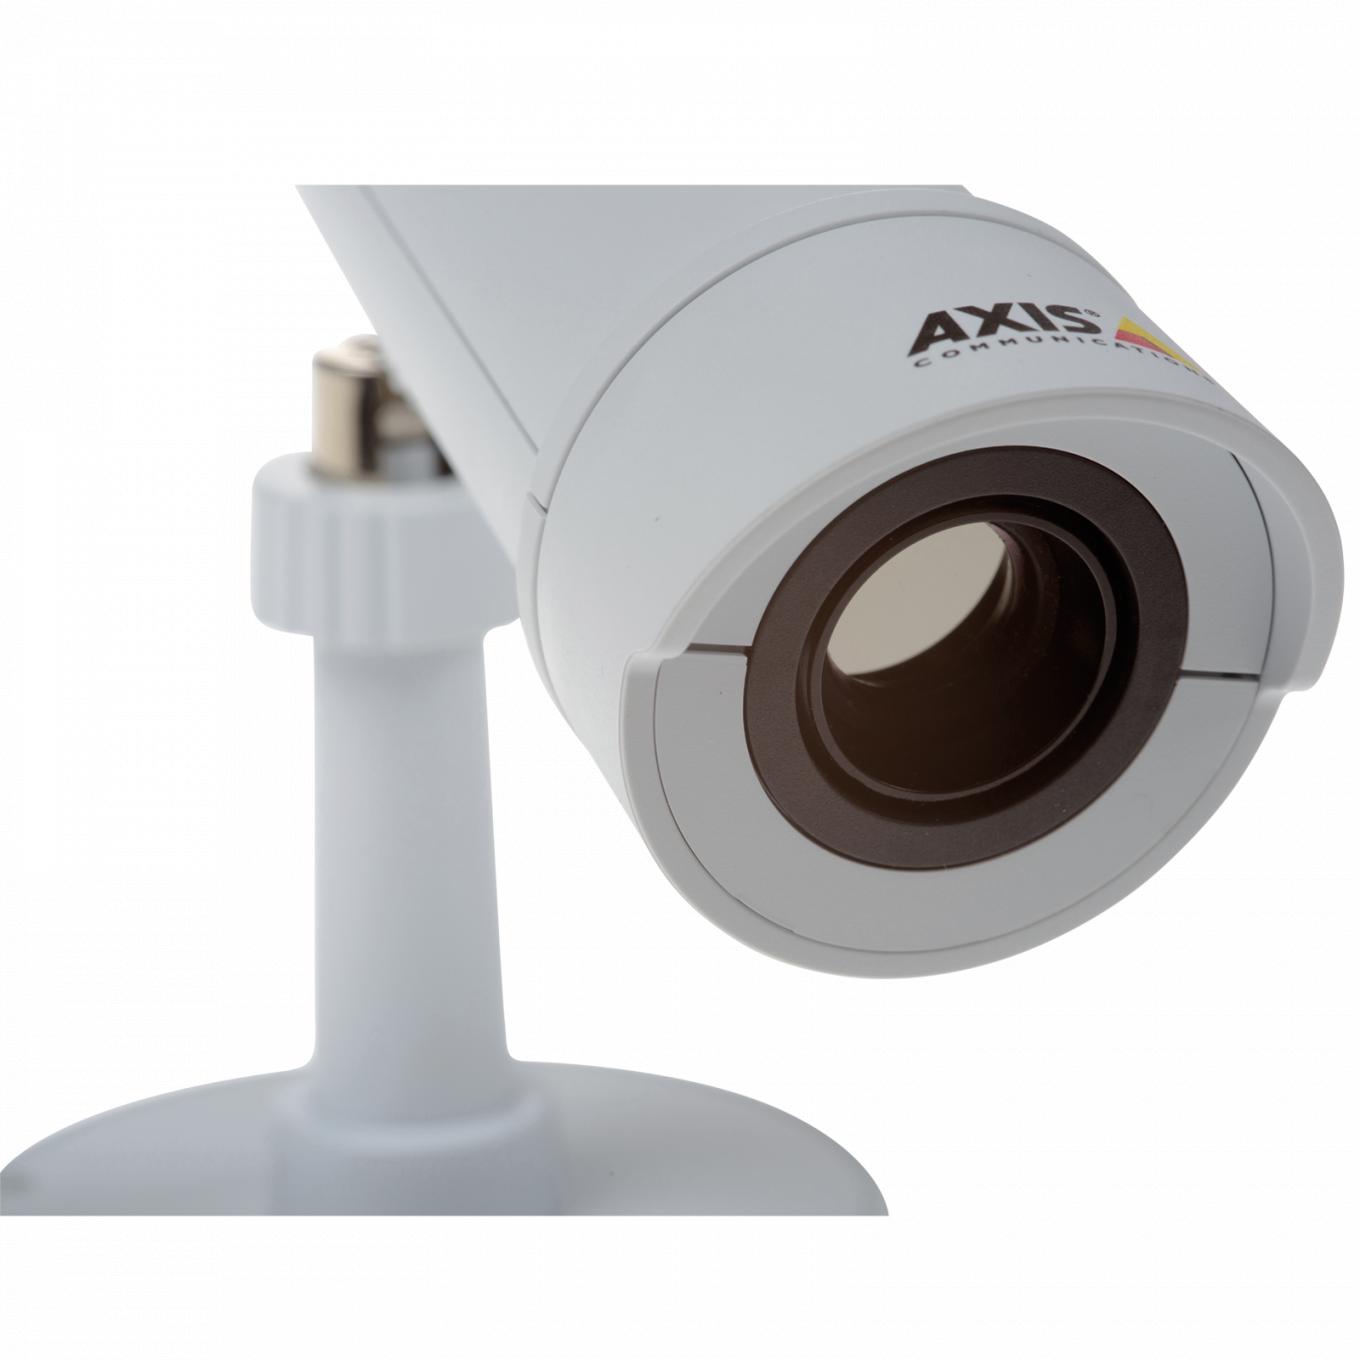 Крупный план тепловизионной сетевой камеры AXIS P1280-E Thermal Network Camera.